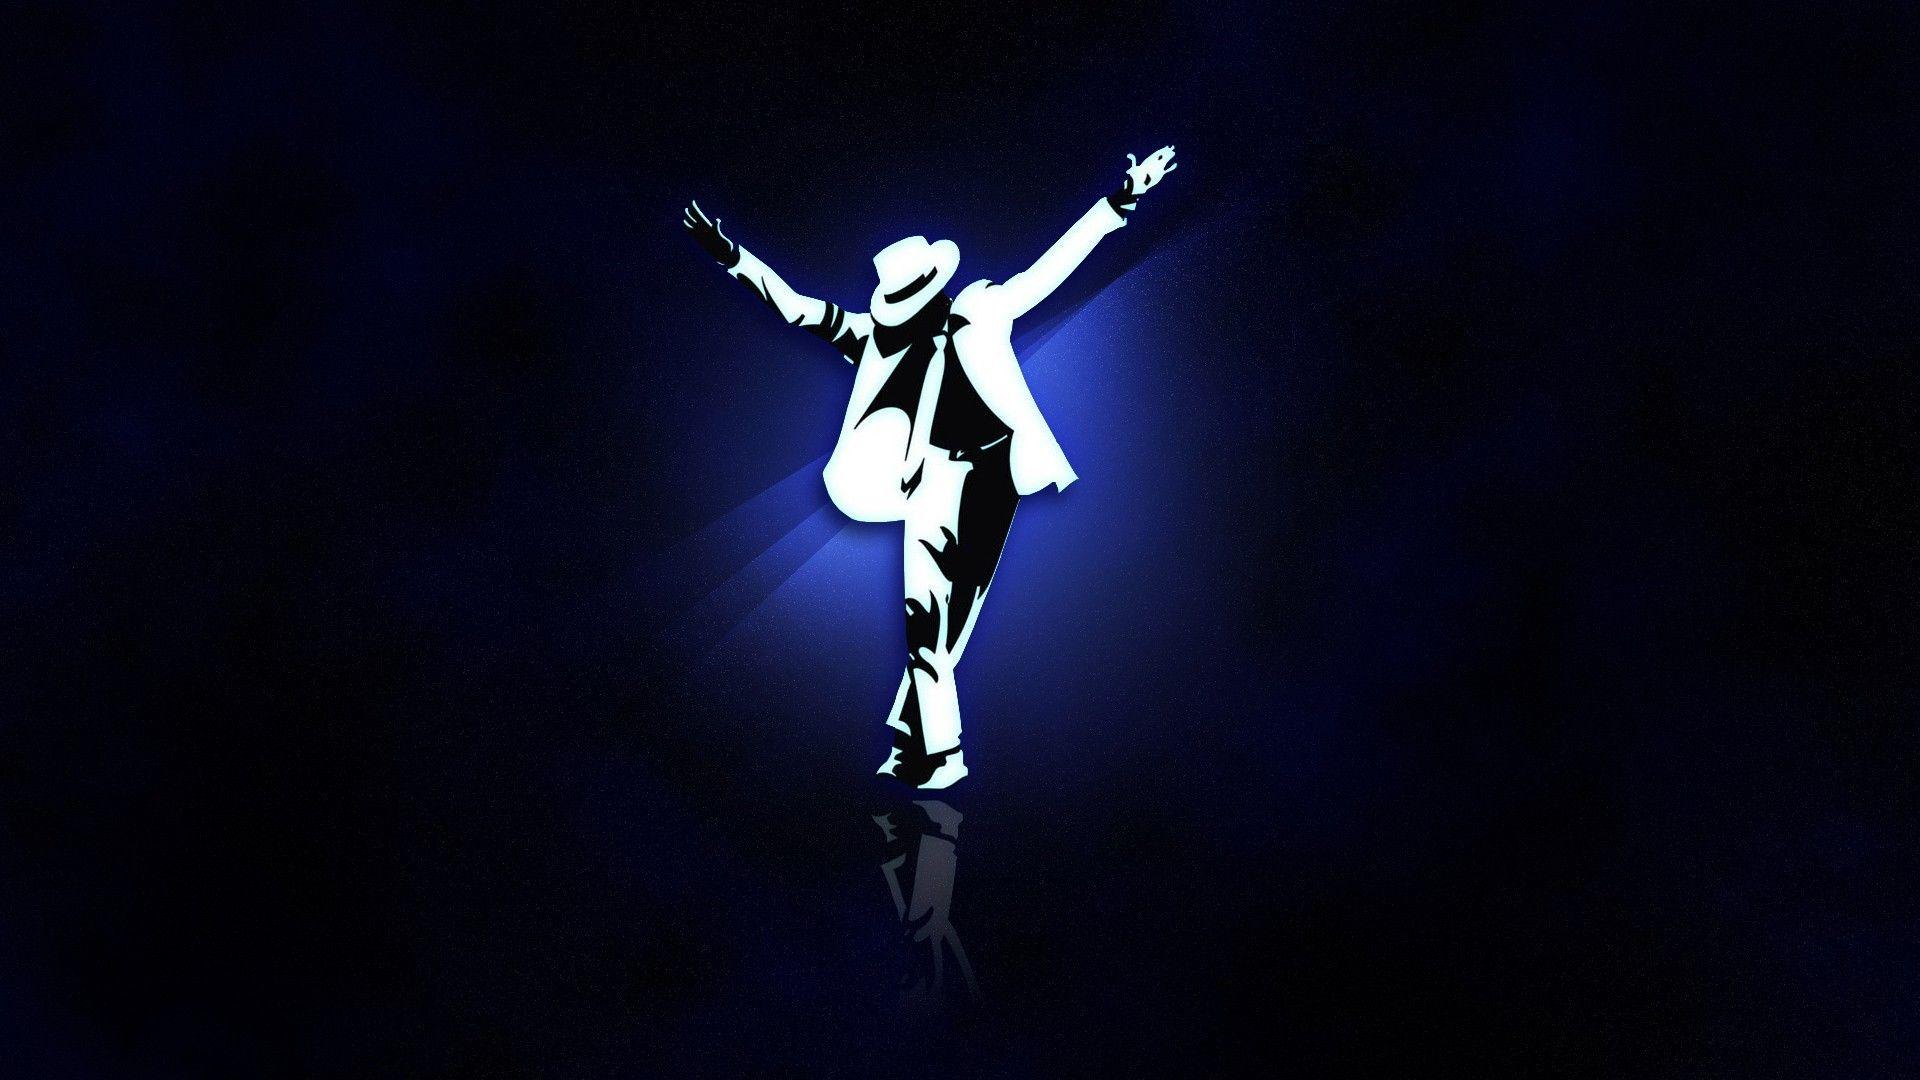 King of Pop Michael Jackson Image 06. hdwallpaper